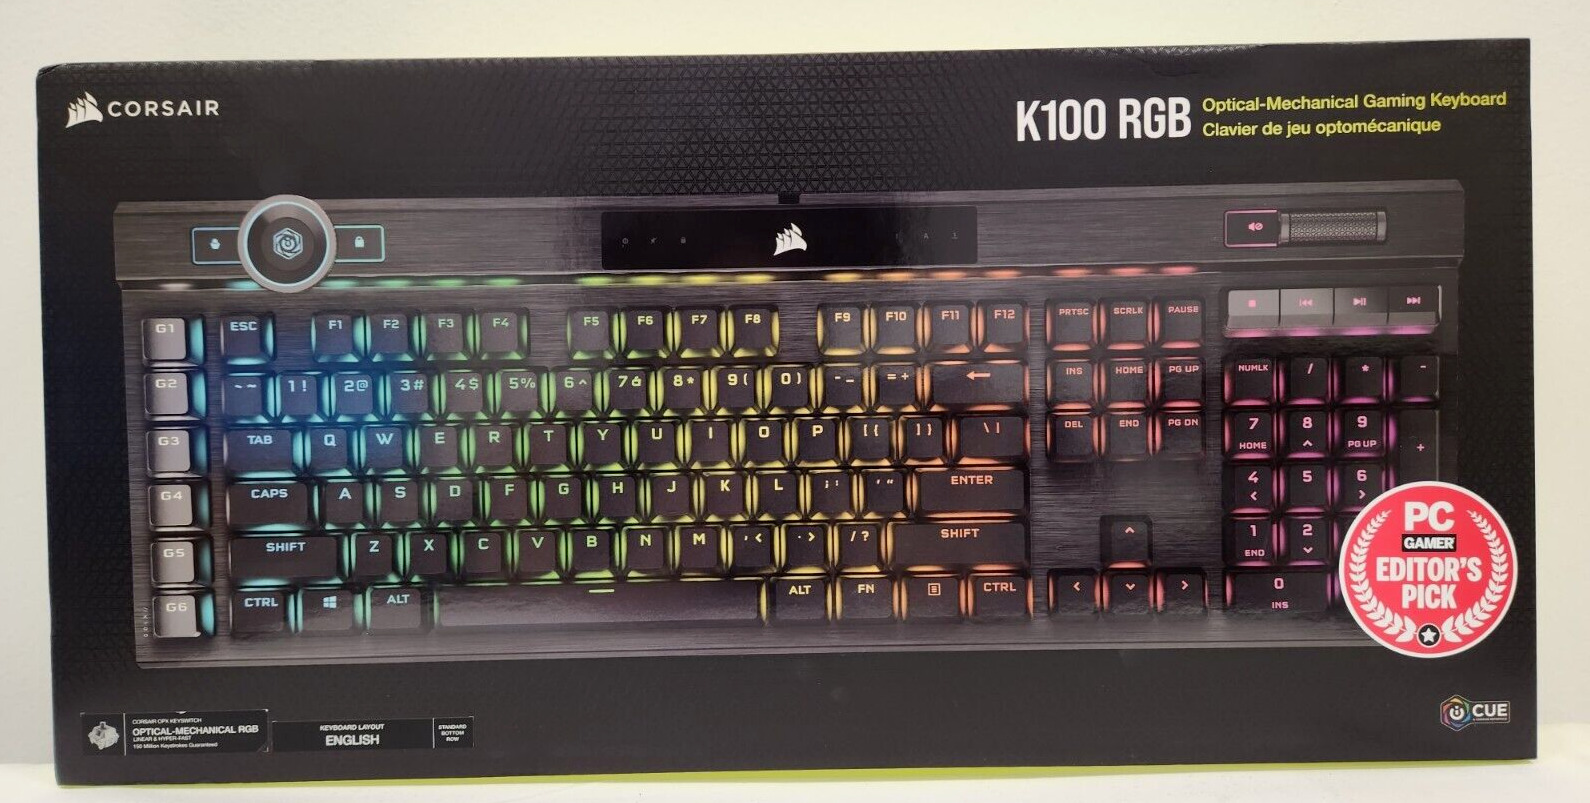 Corsair K100 RGB Optical-Mechanical Wired Gaming Keyboard Sealed NEW IN BOX